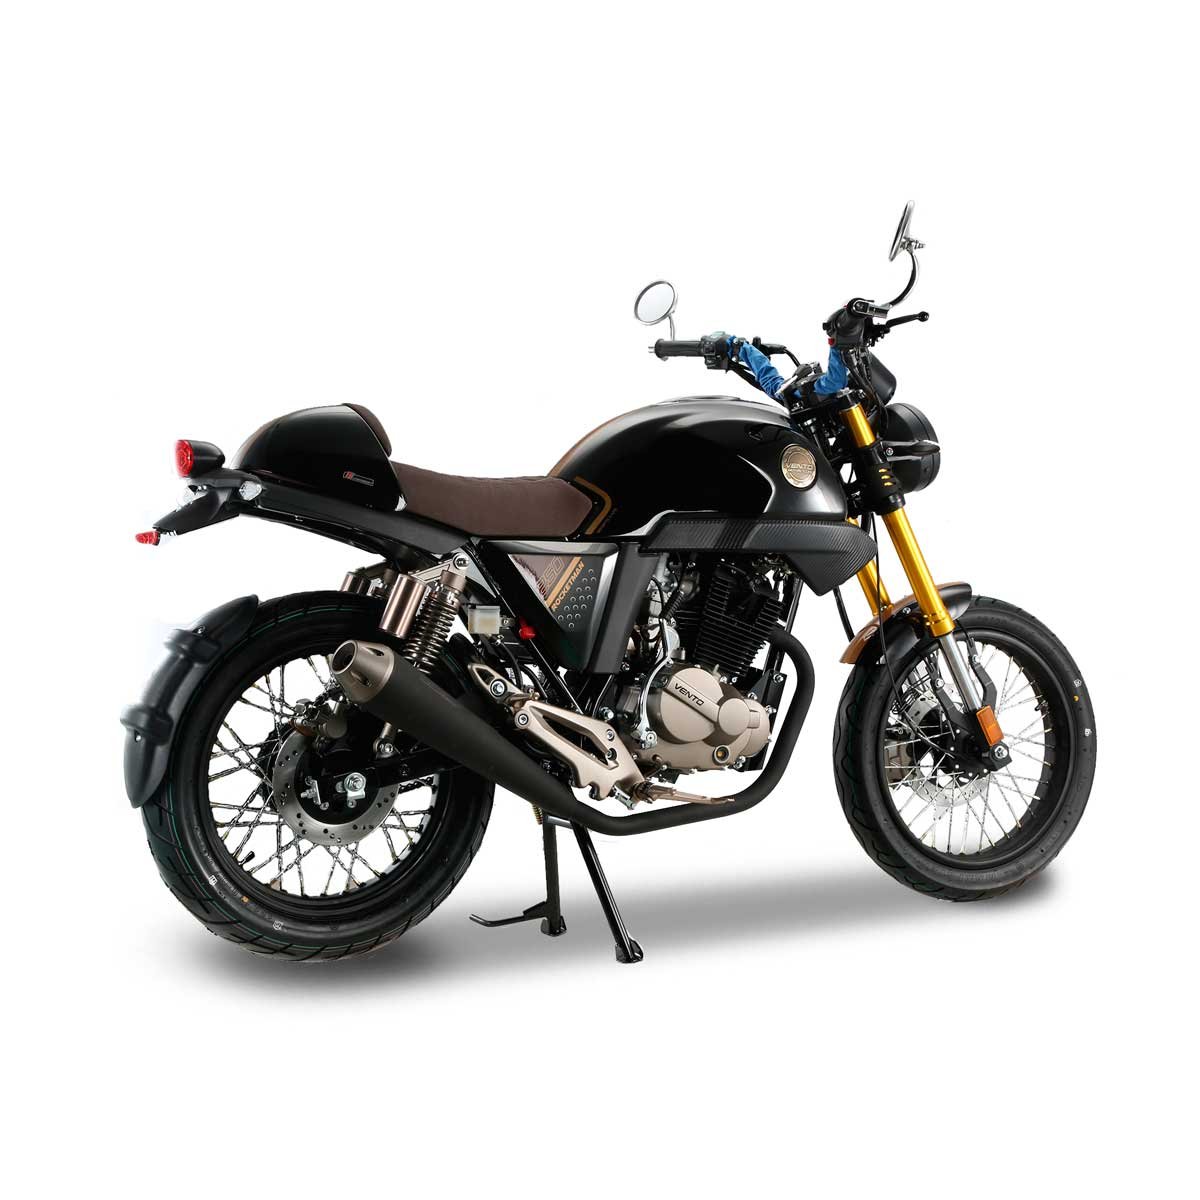 Motocicleta Rocketman Sport 250Cc 2019 Vento